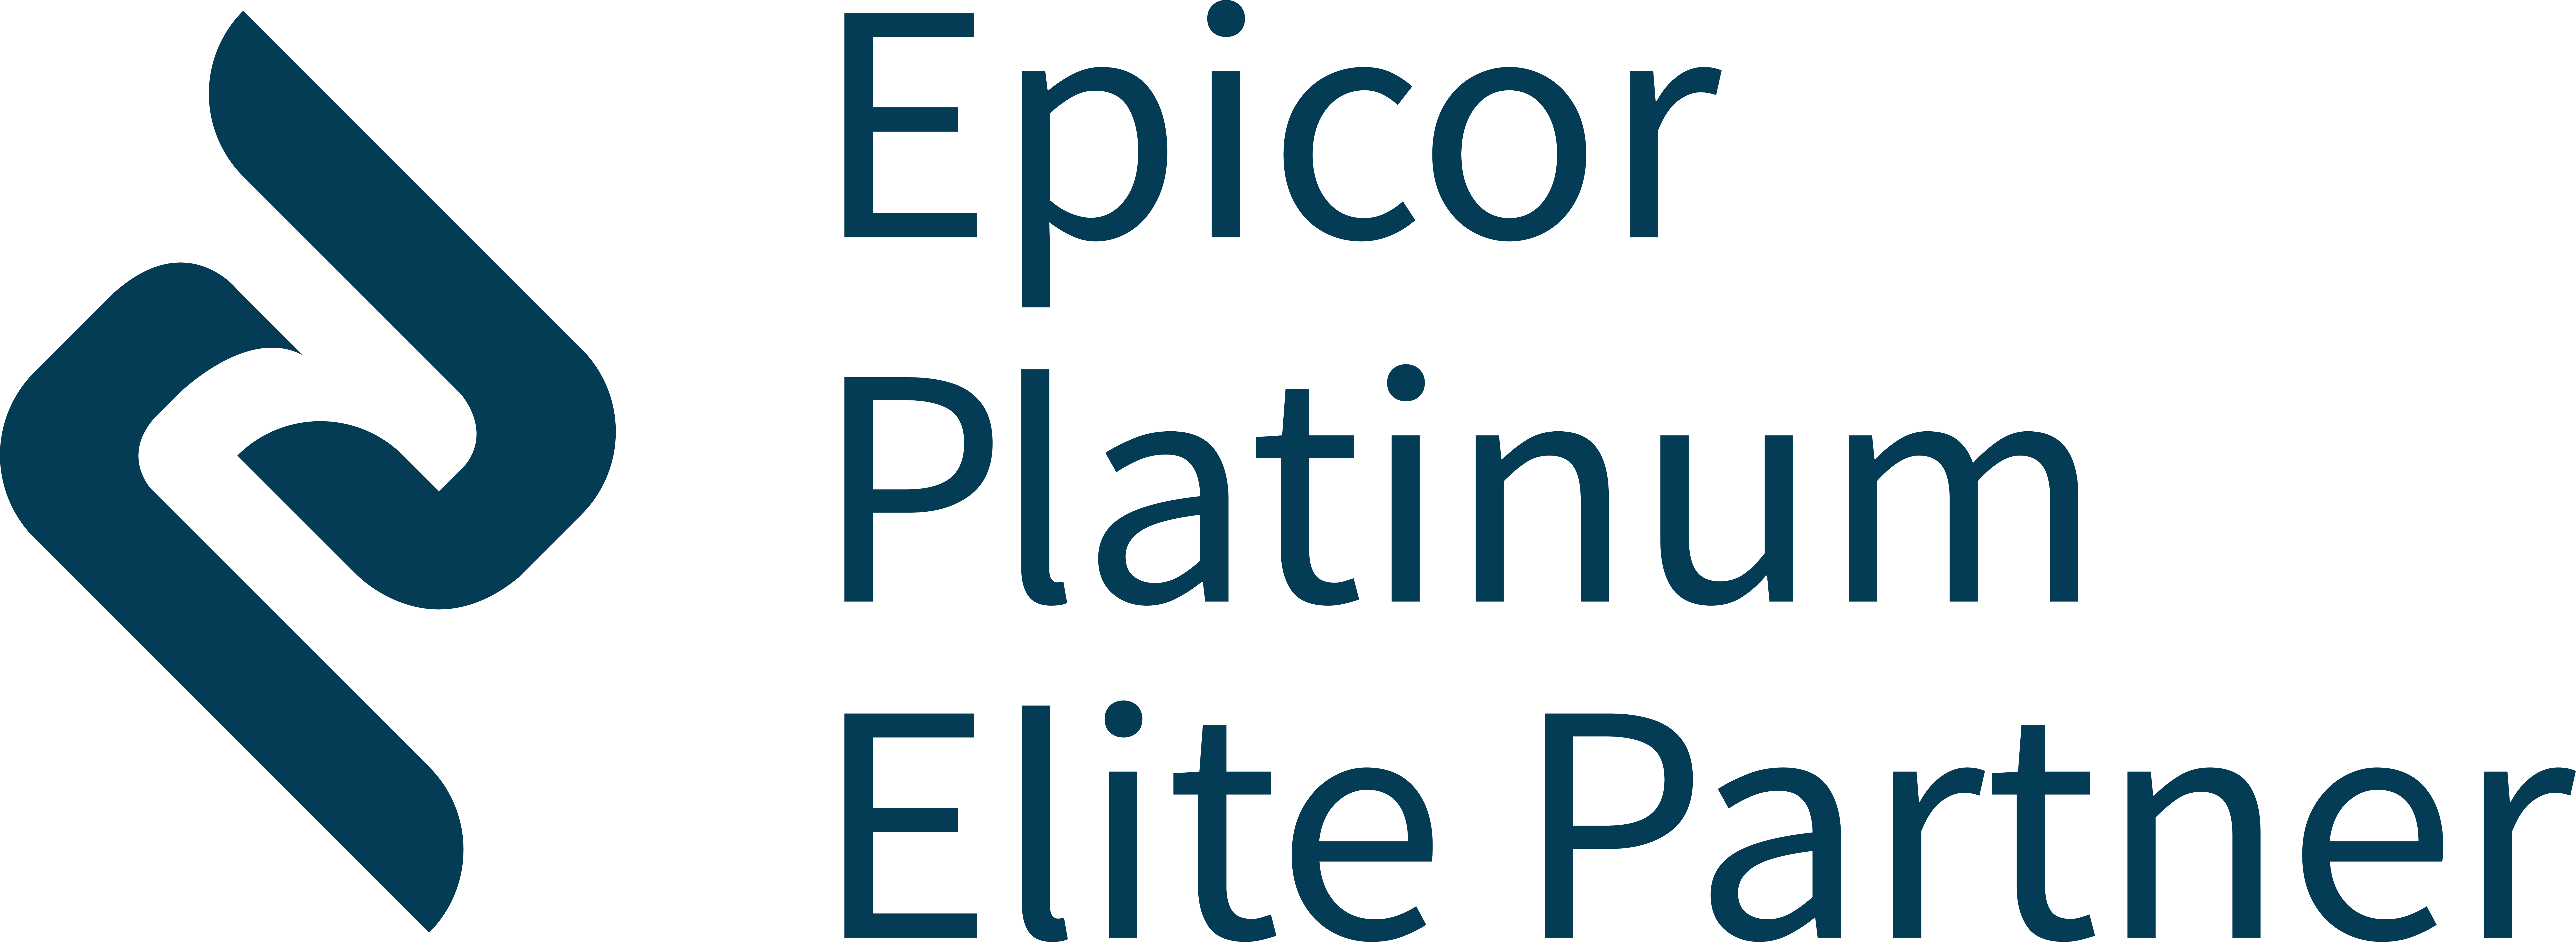 ERP System, Epicor Platinum Elite Partner, Epicor Kinetic, ERP Upgrade